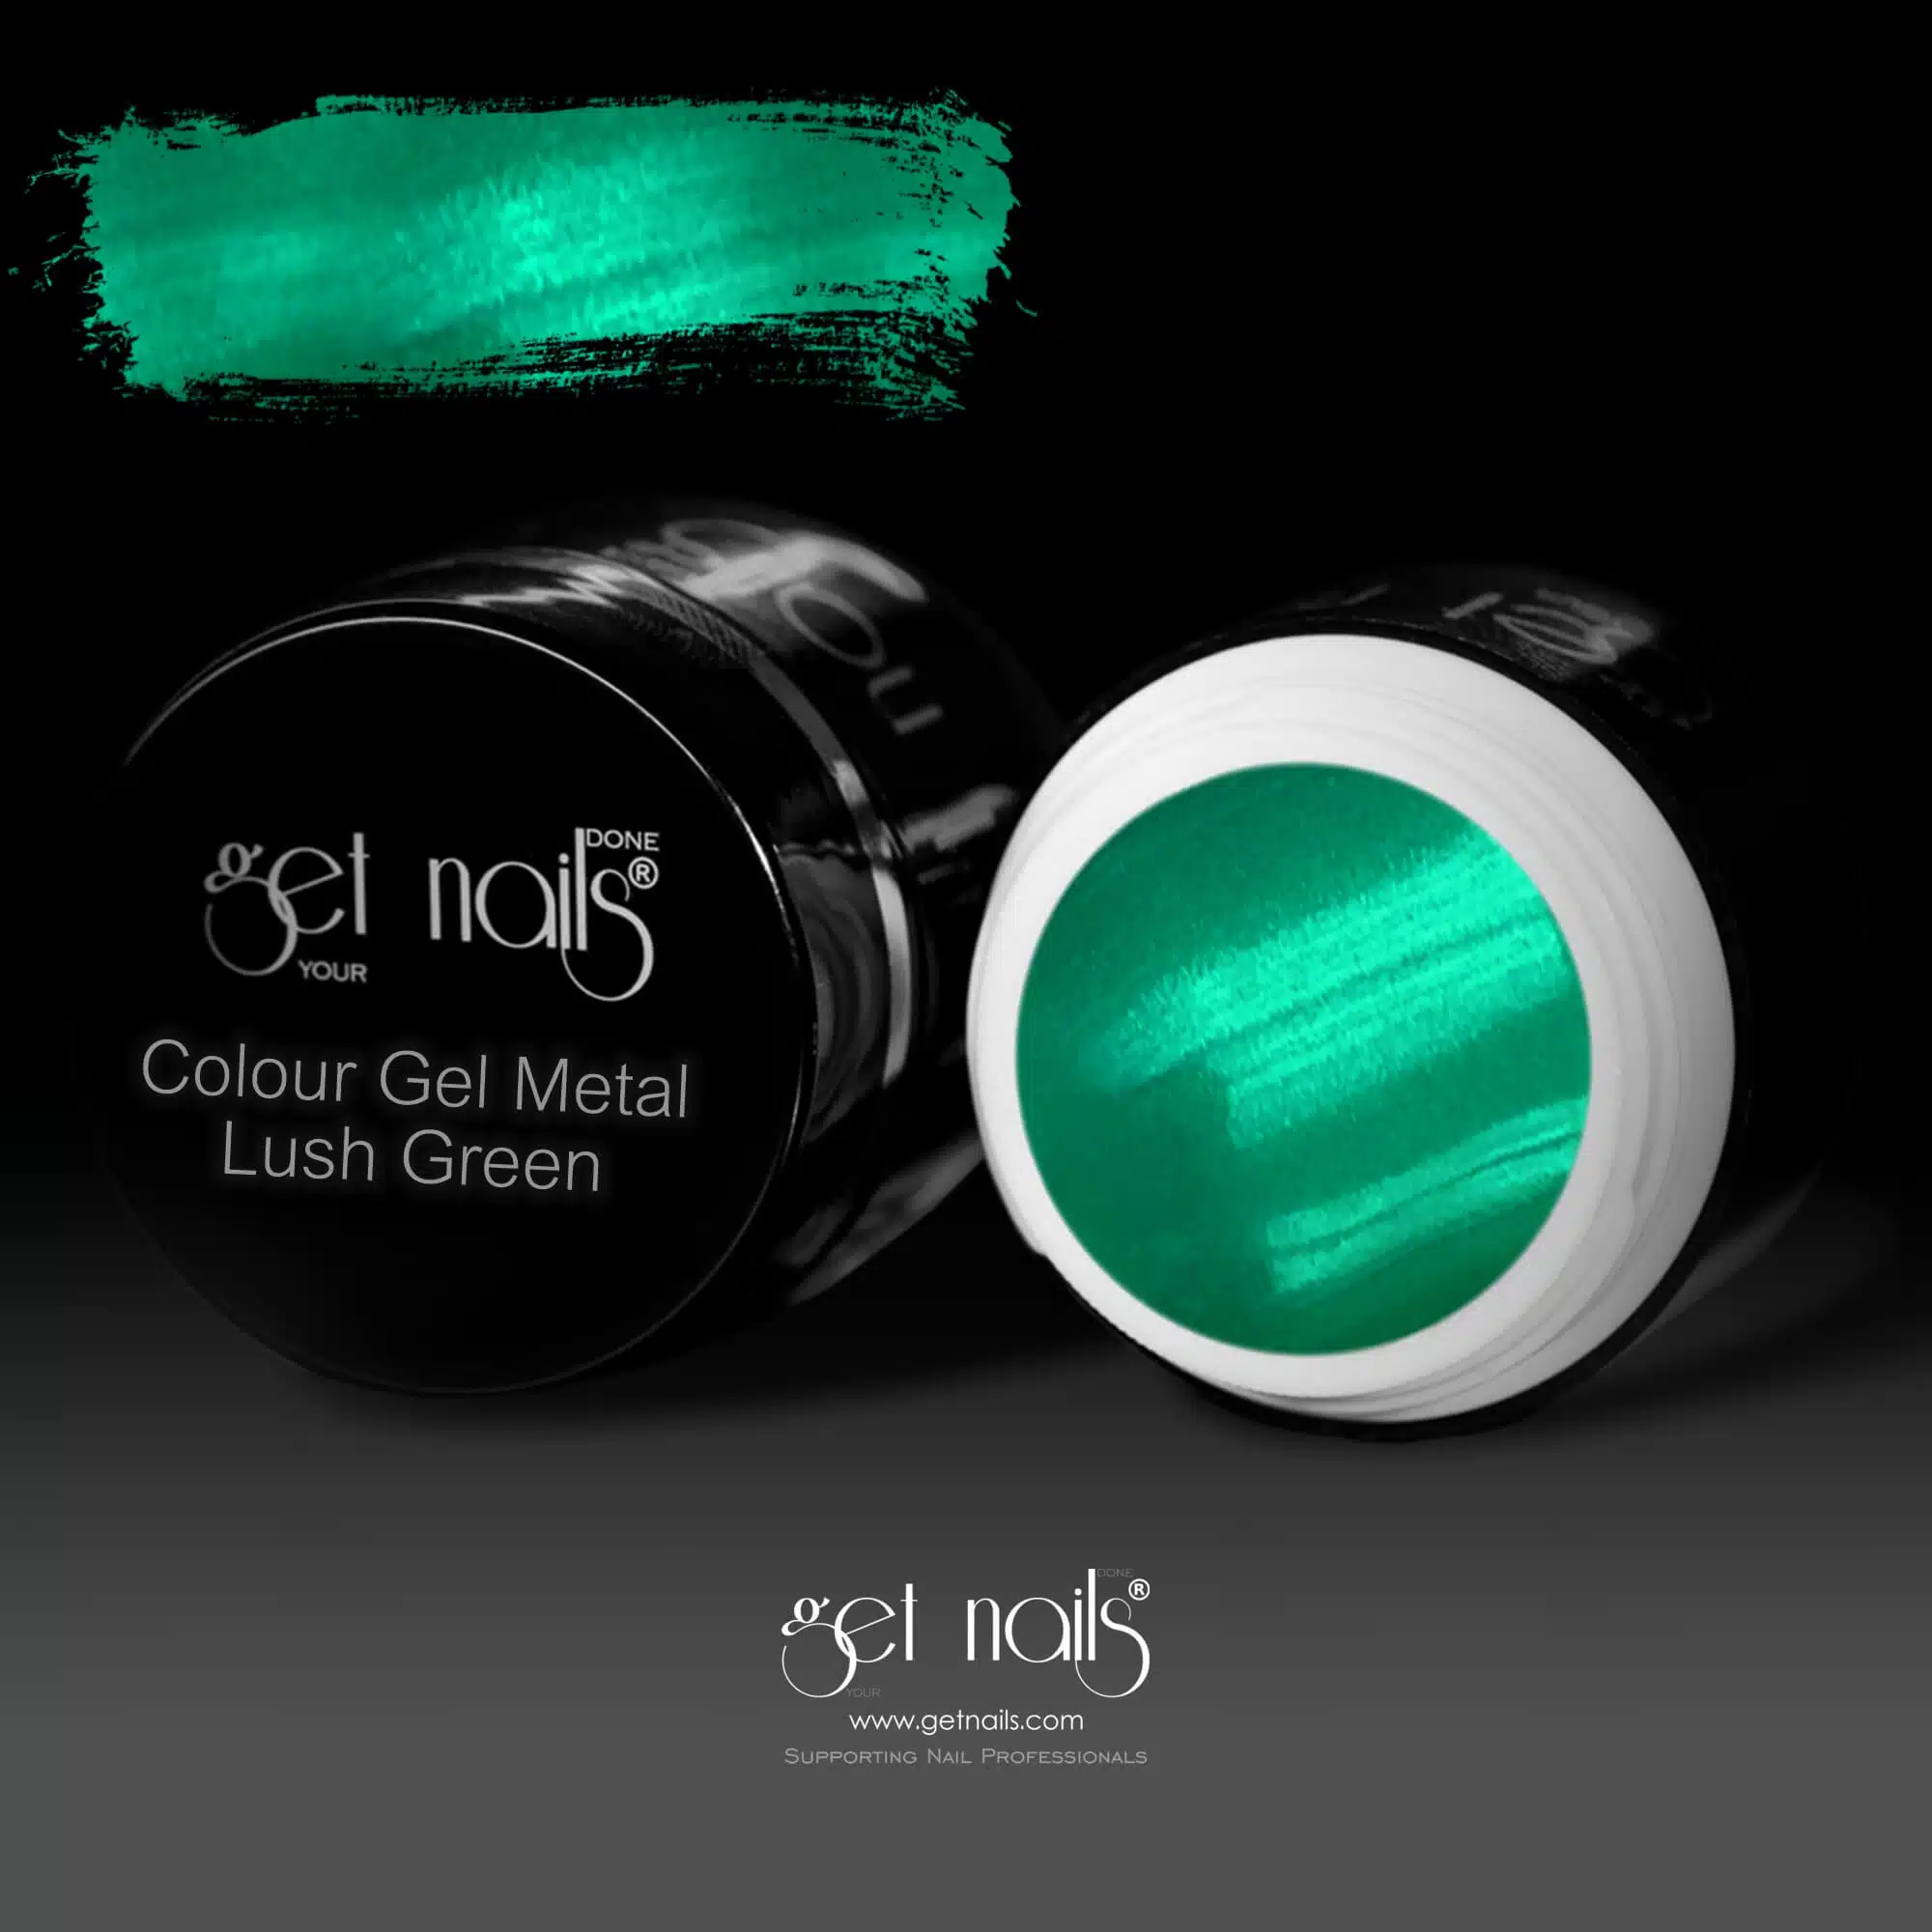 Get Nails Austria - Color Gel Metal Lush Green 5g